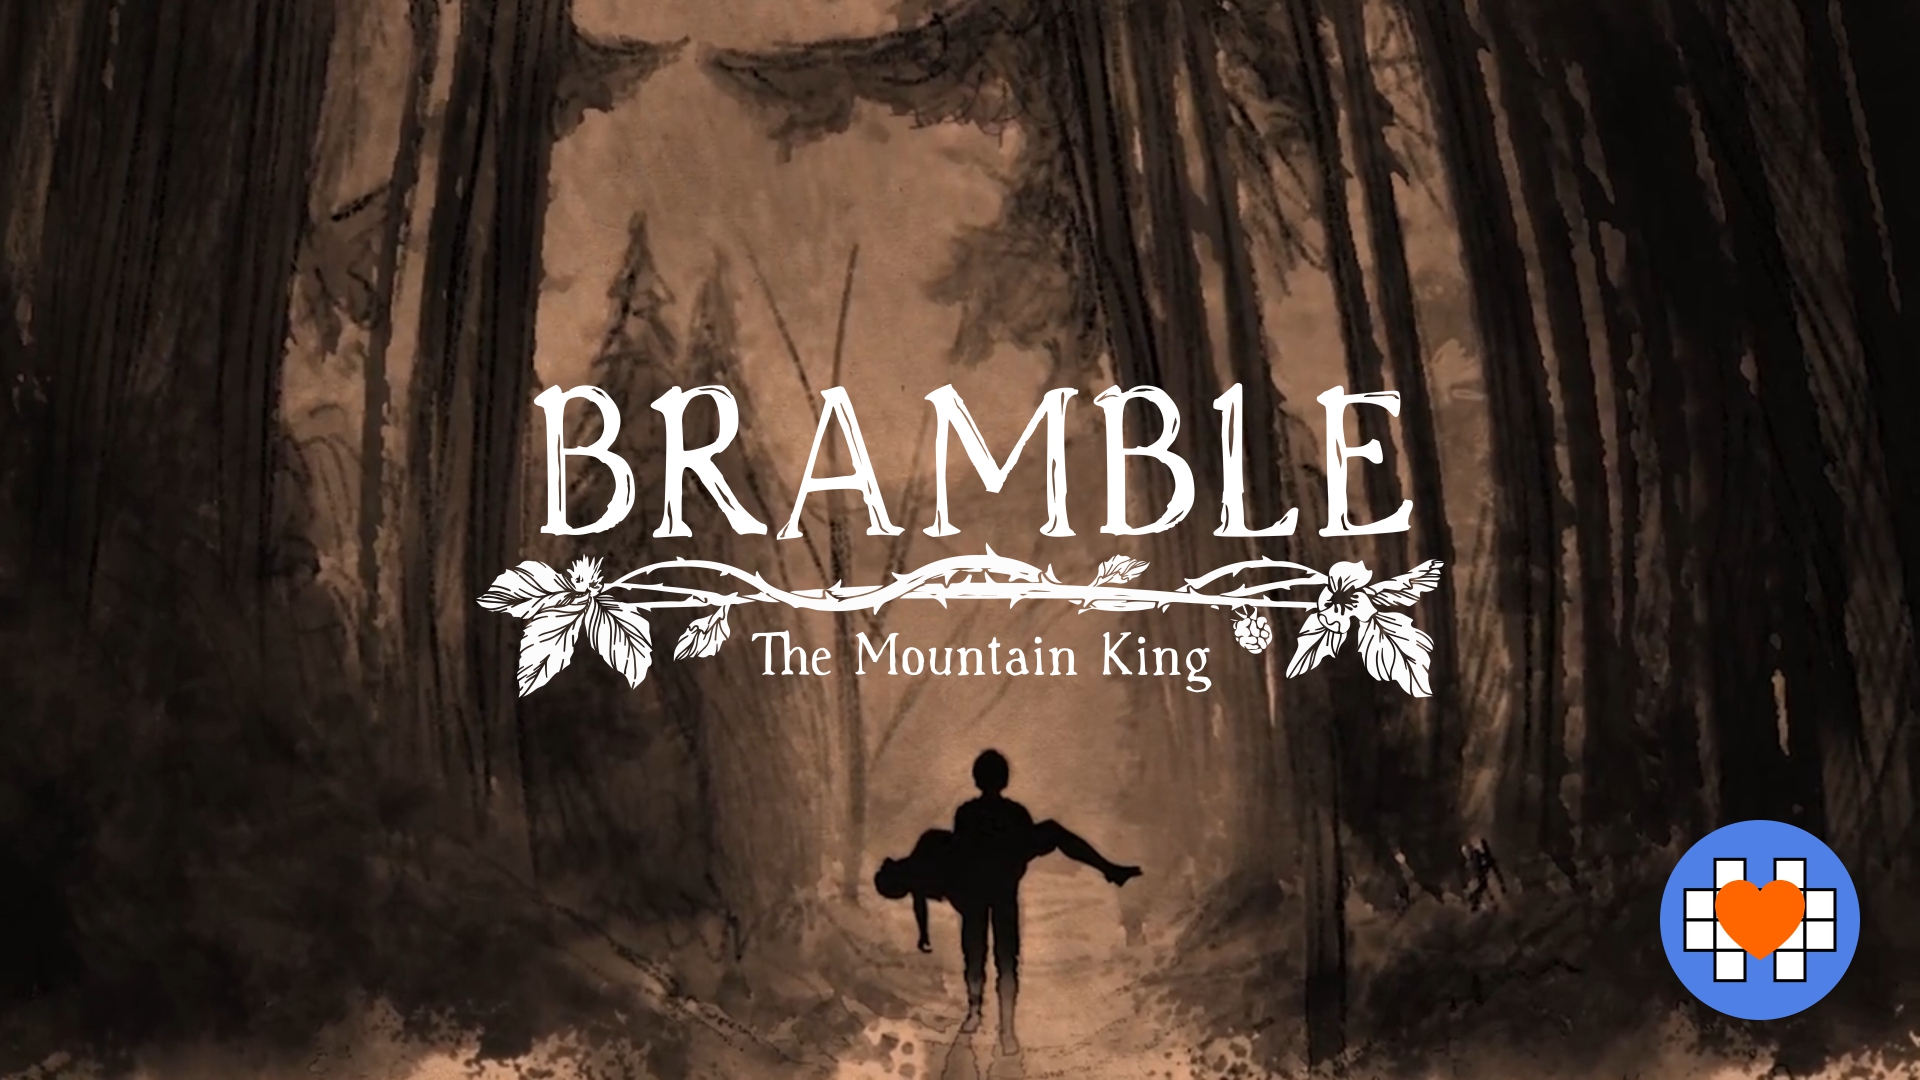 BRAMBLE: Daylight KING NEWS MOUNTAIN A - THE Horror -